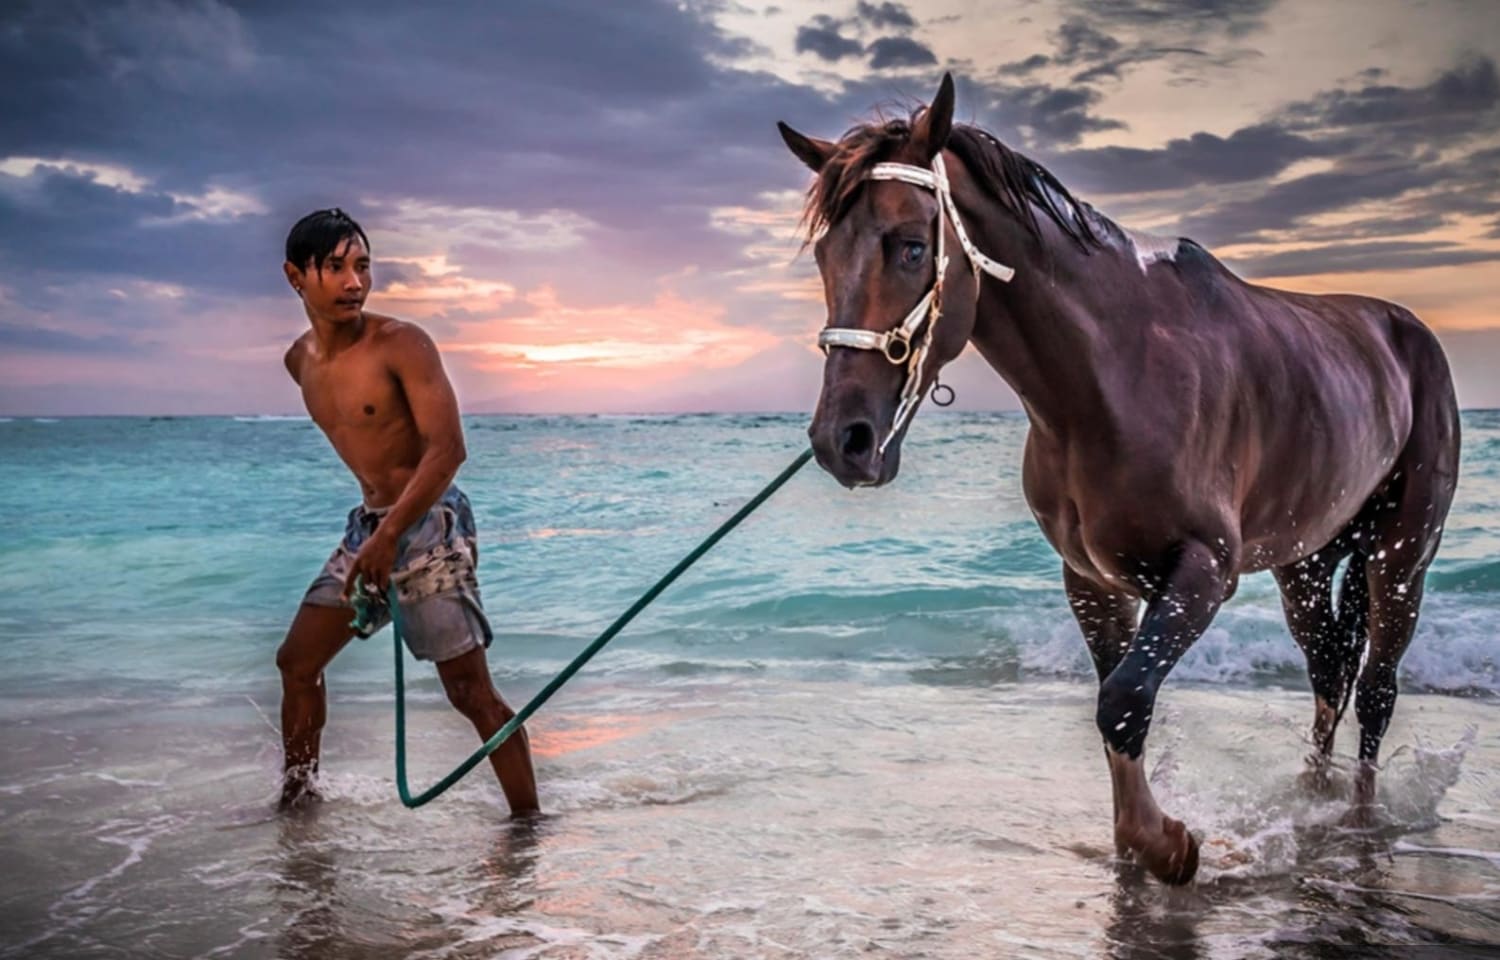 A boy and his horse, Gili Trawangan, Lombok, Indonesia. (Image - Krista Paasi).